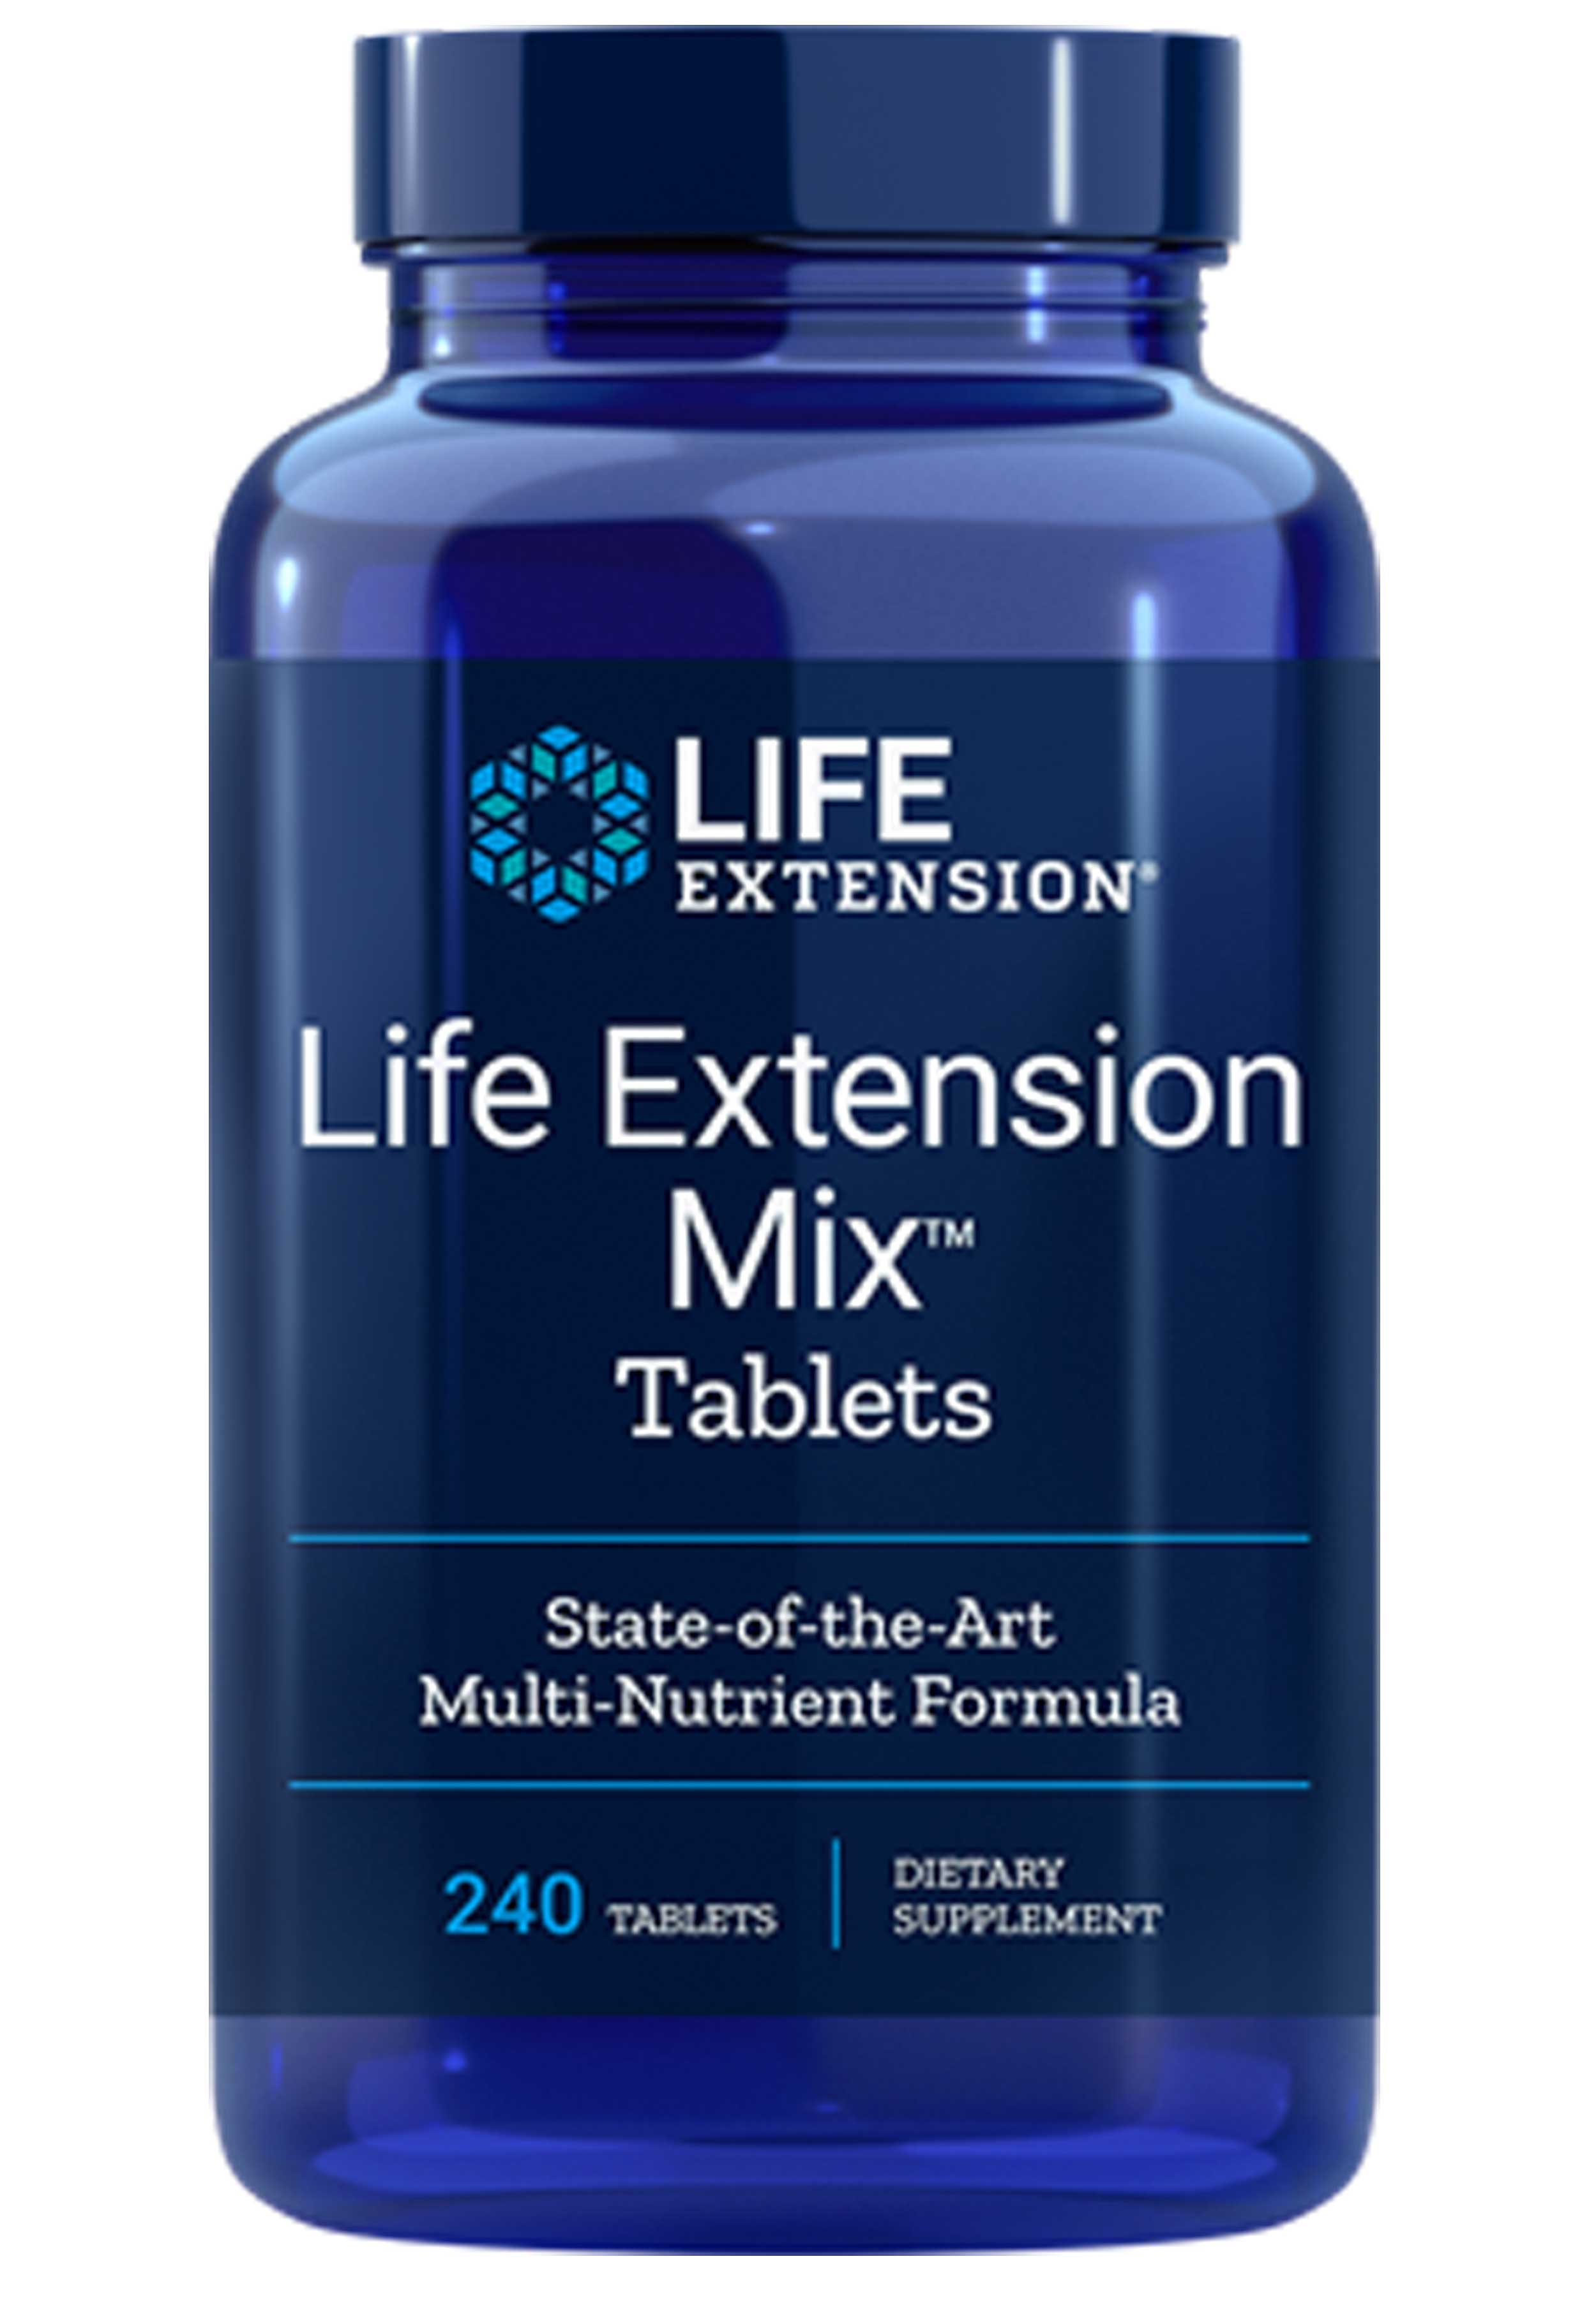 Life Extension Mix